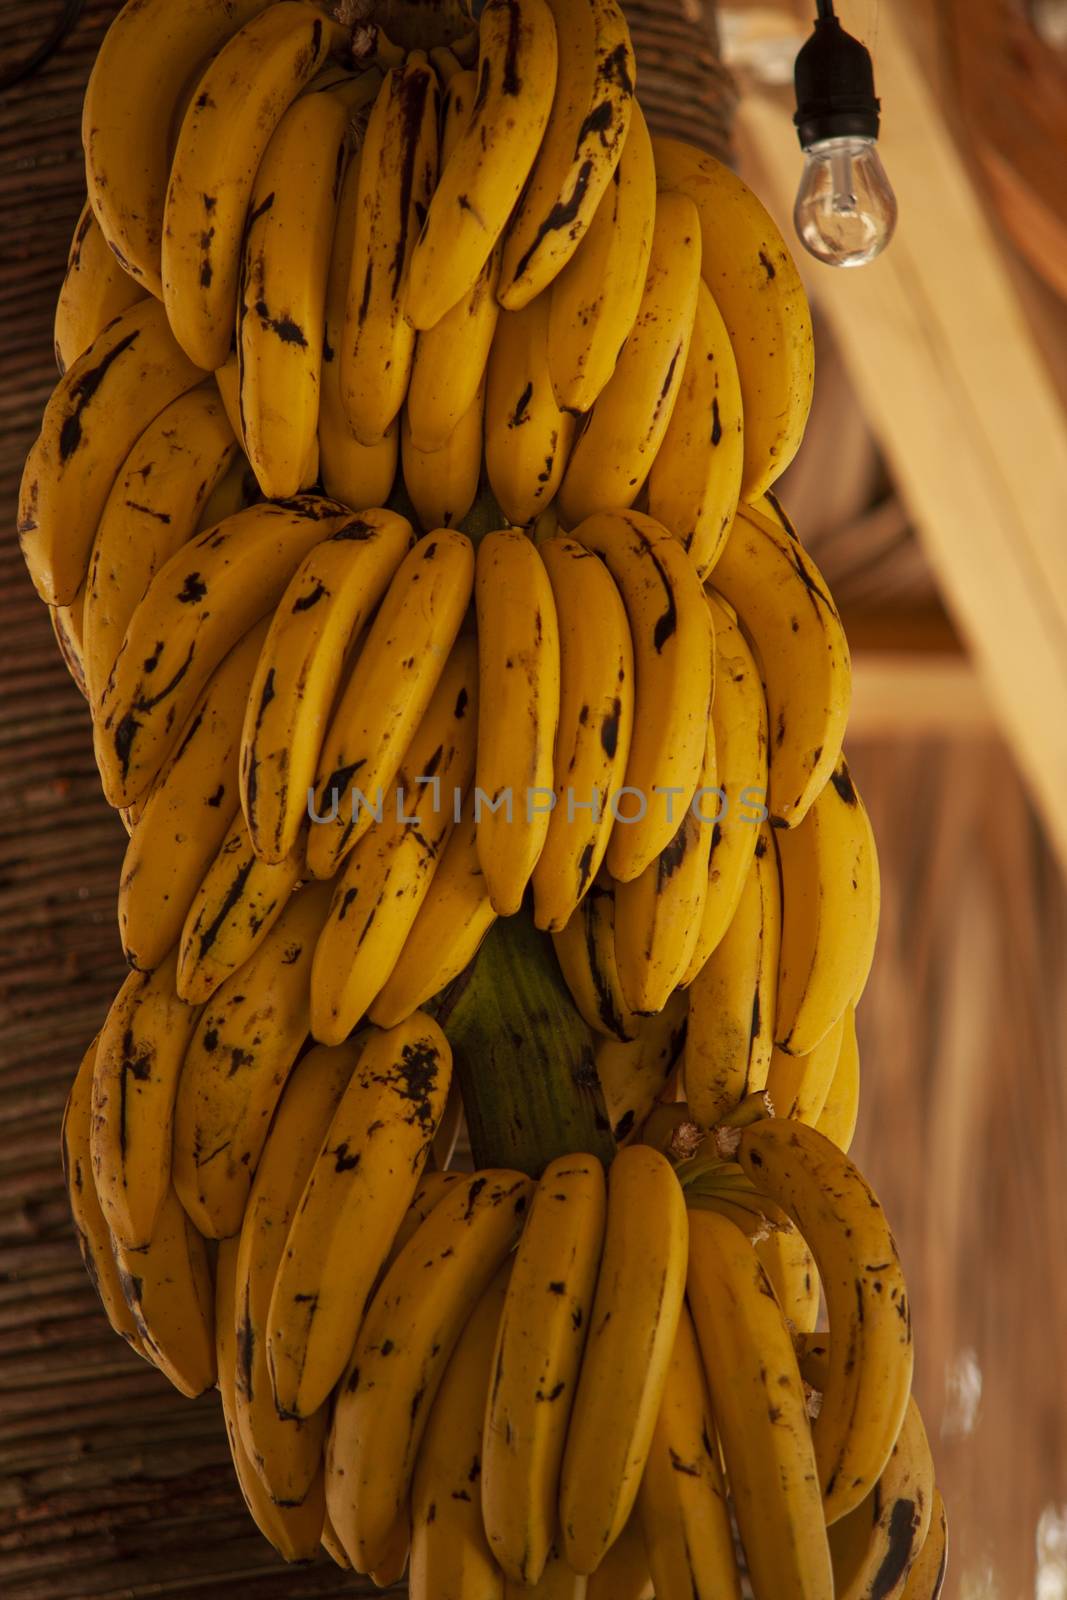 Wicker of bananas by pippocarlot